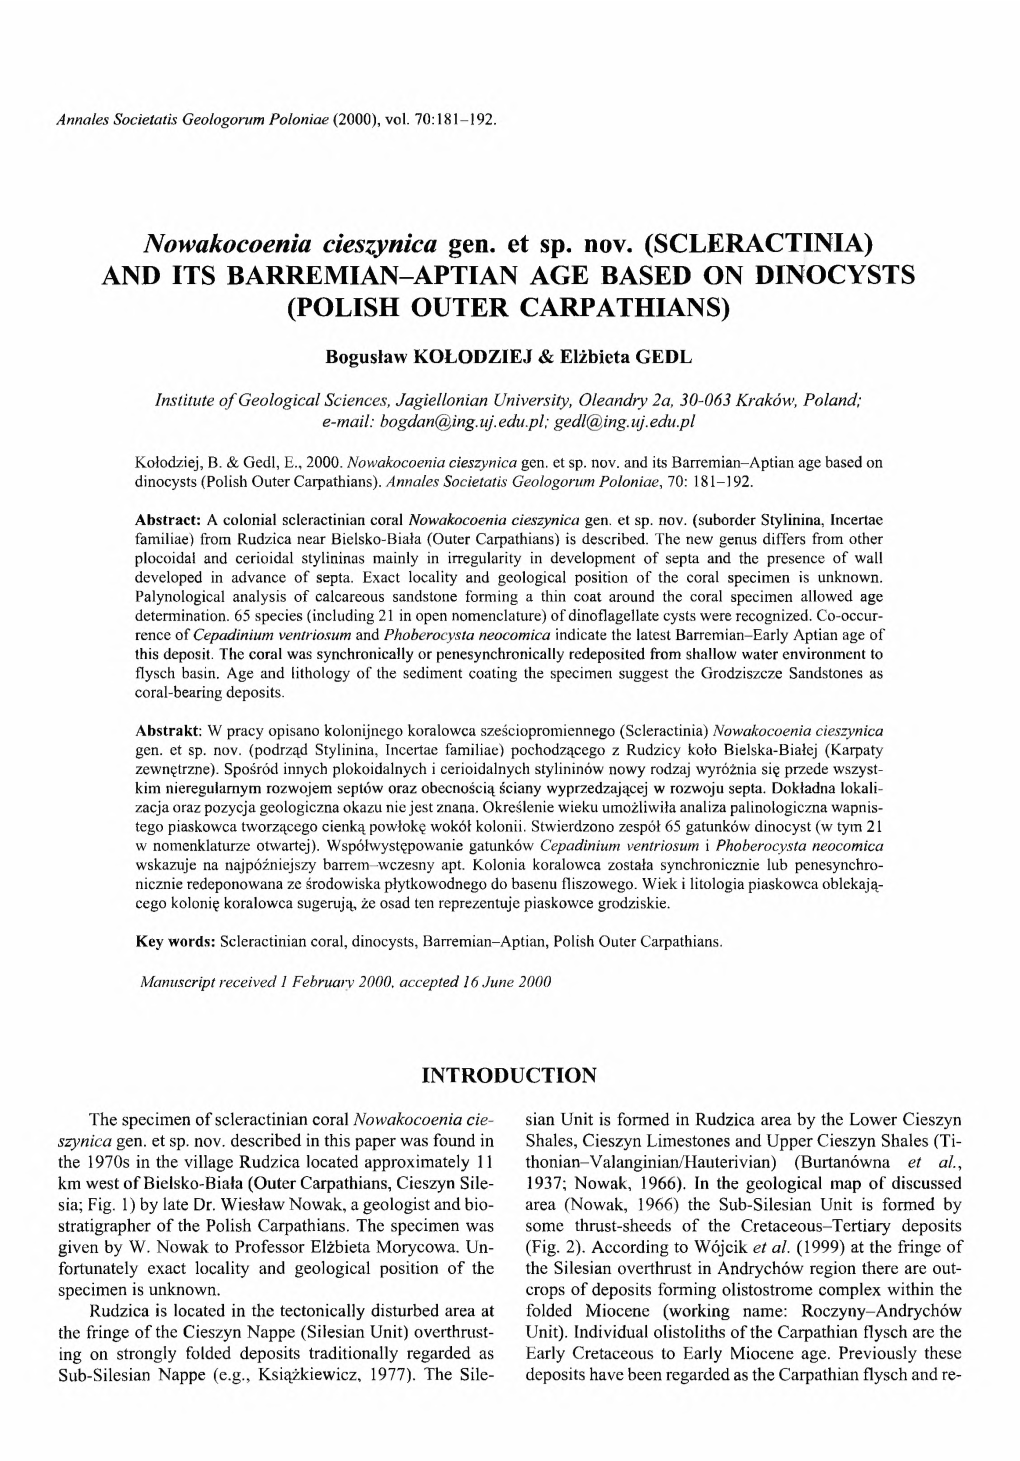 Nowakocoenia Cieszynica Gen. Et Sp. Nov. and Its Barremian-Aptian Age Based on Dinocysts (Polish Outer Carpathians)